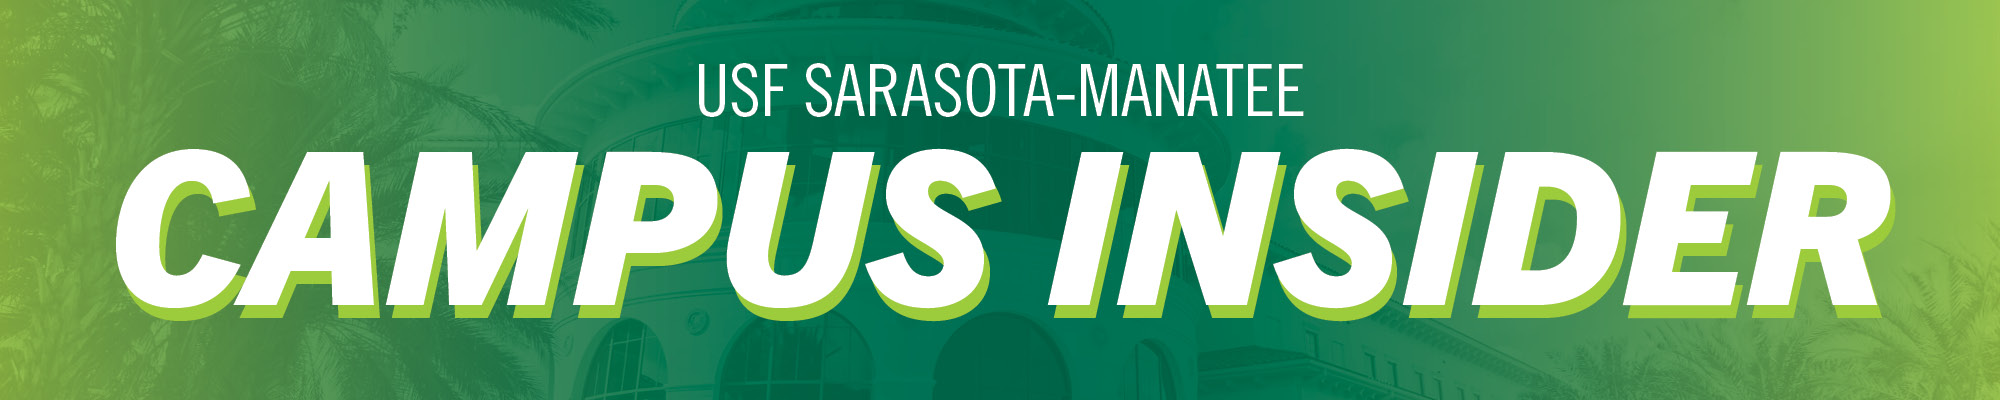 USF Sarasota-Manatee Campus Insider banner